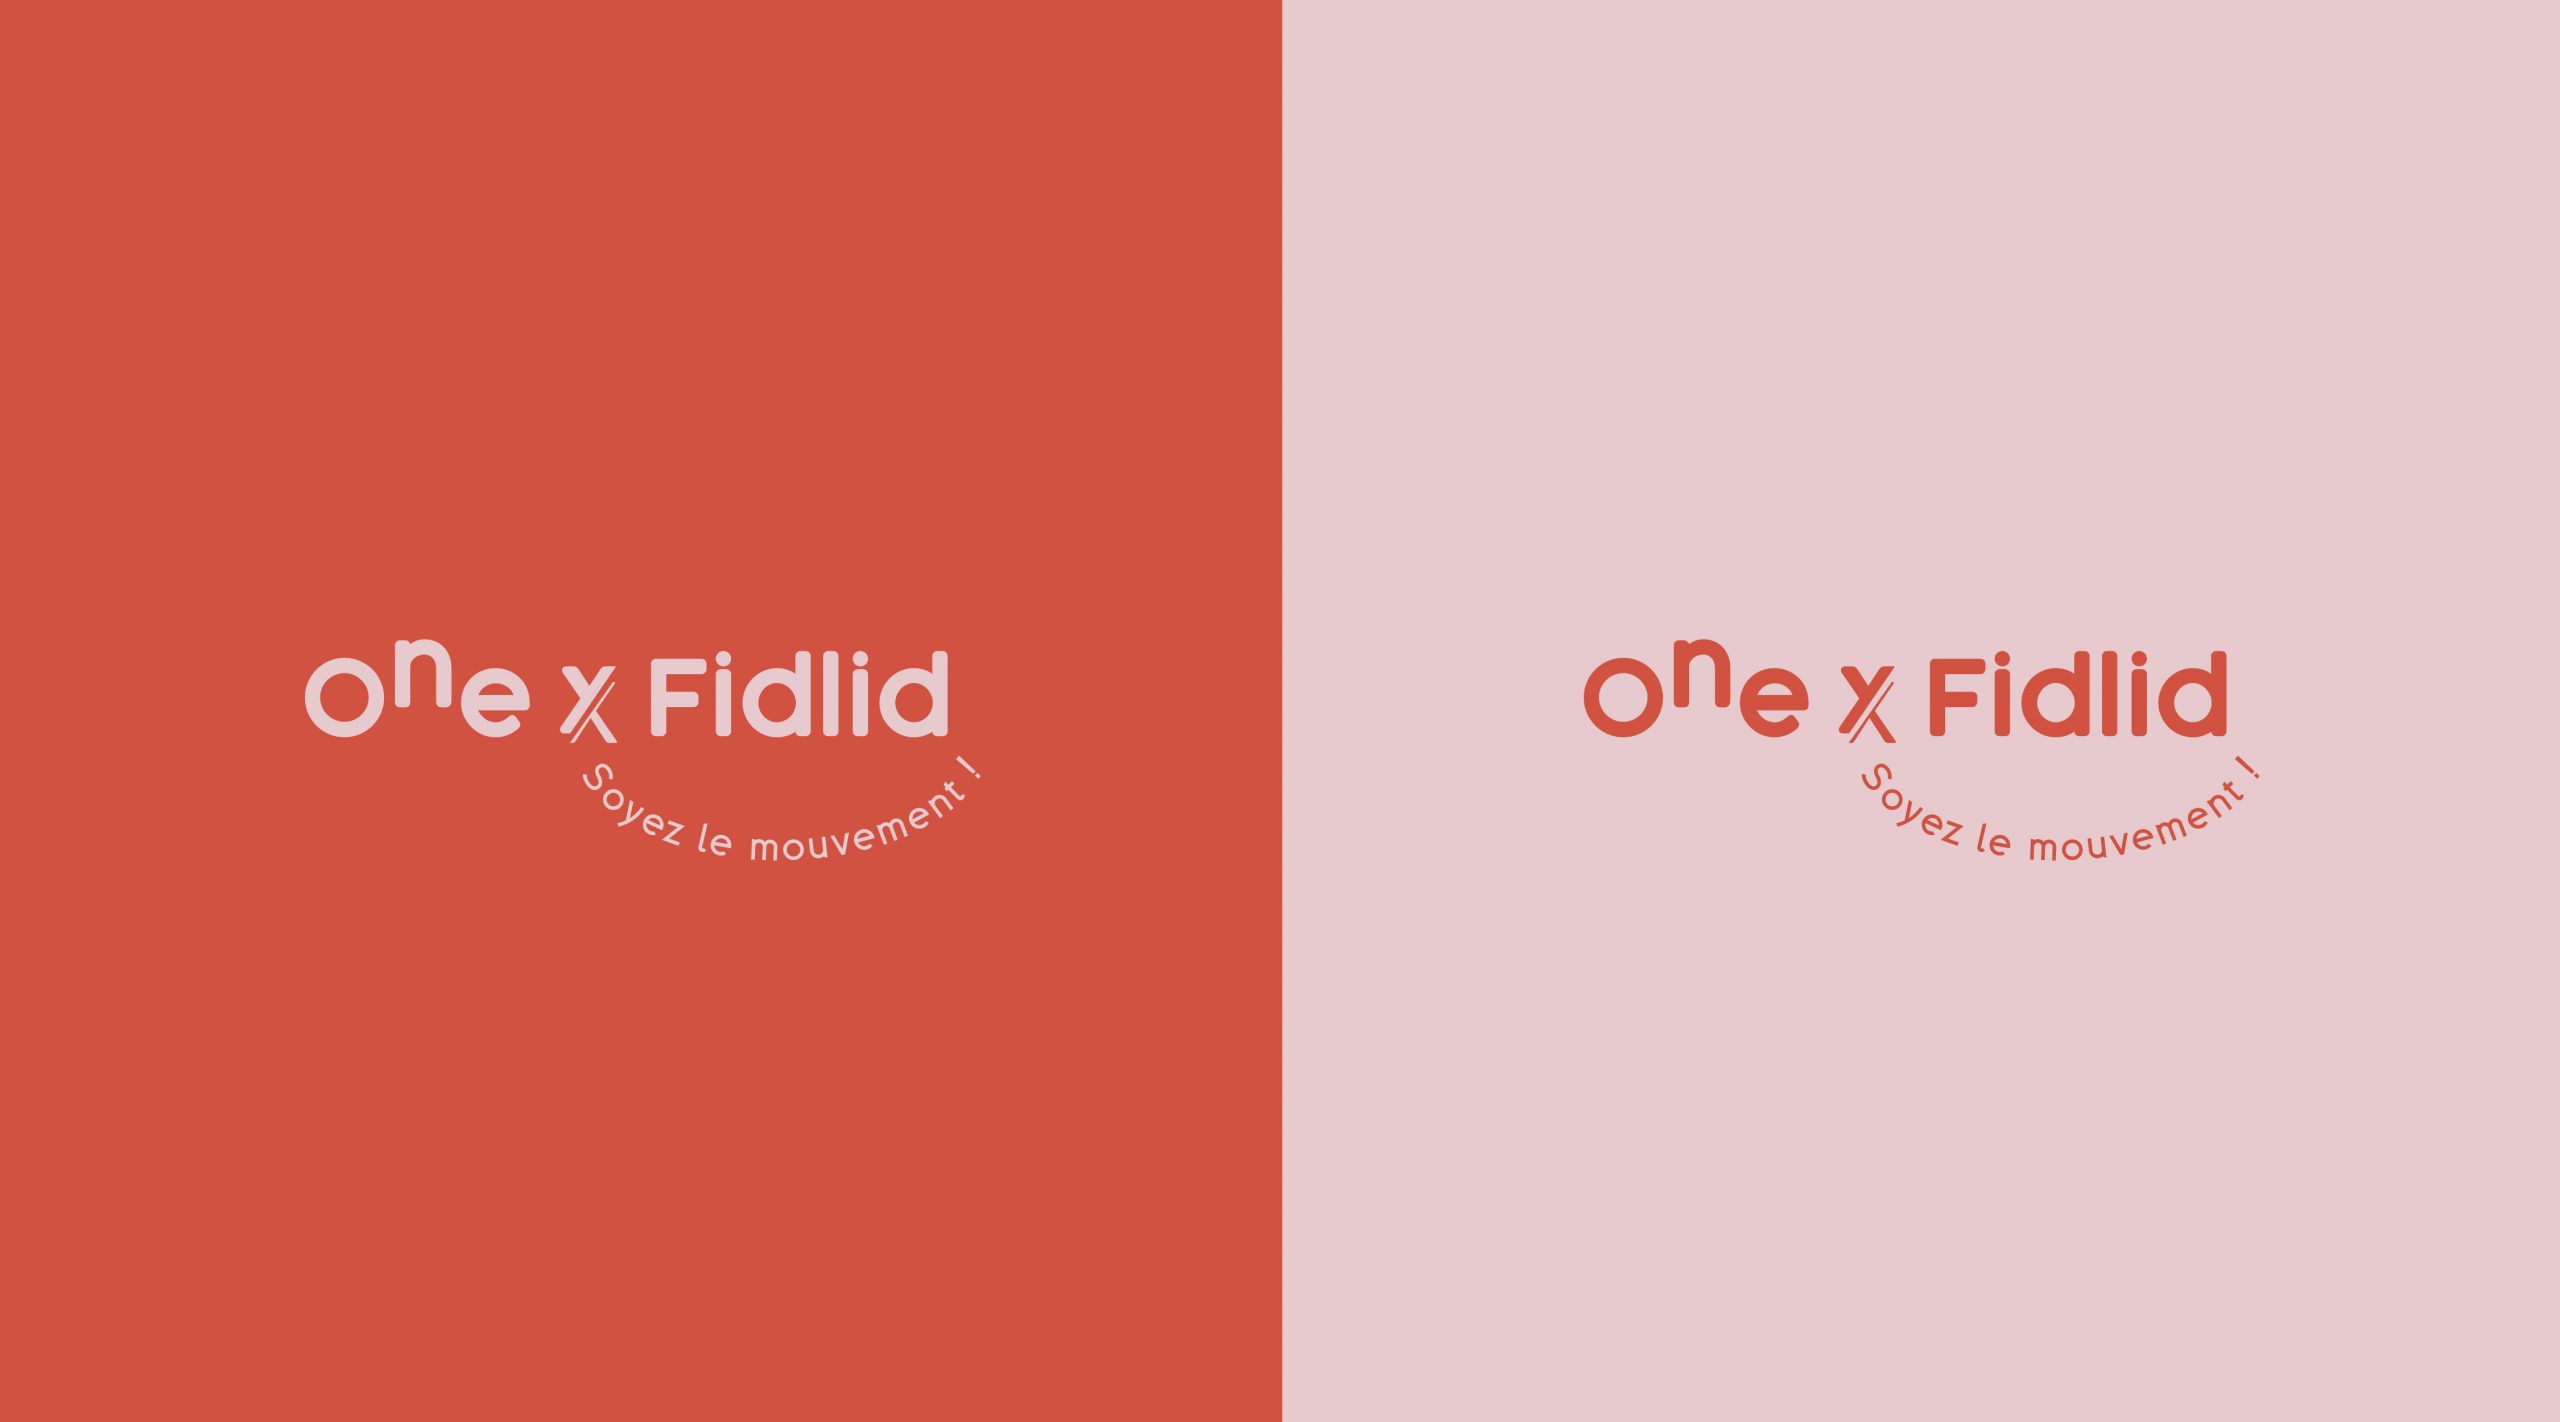 logo one x fidlid